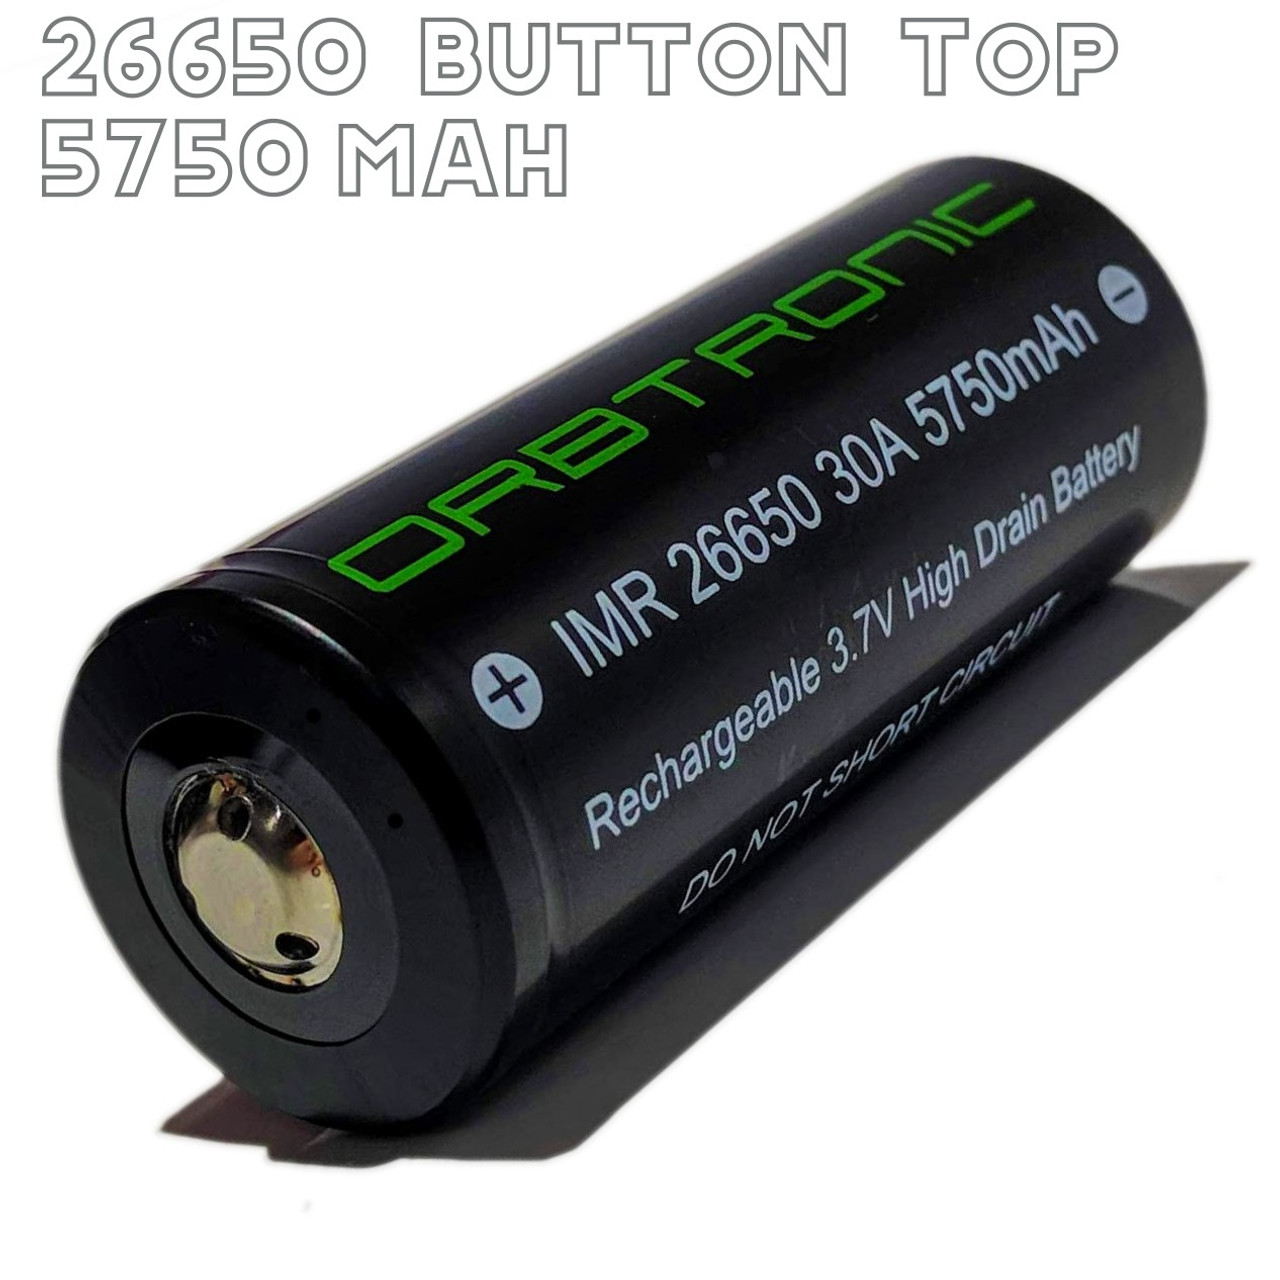 26650 Battery 5750mAh 30A BUTTON TOP IMR Li-ion-Orbtronic